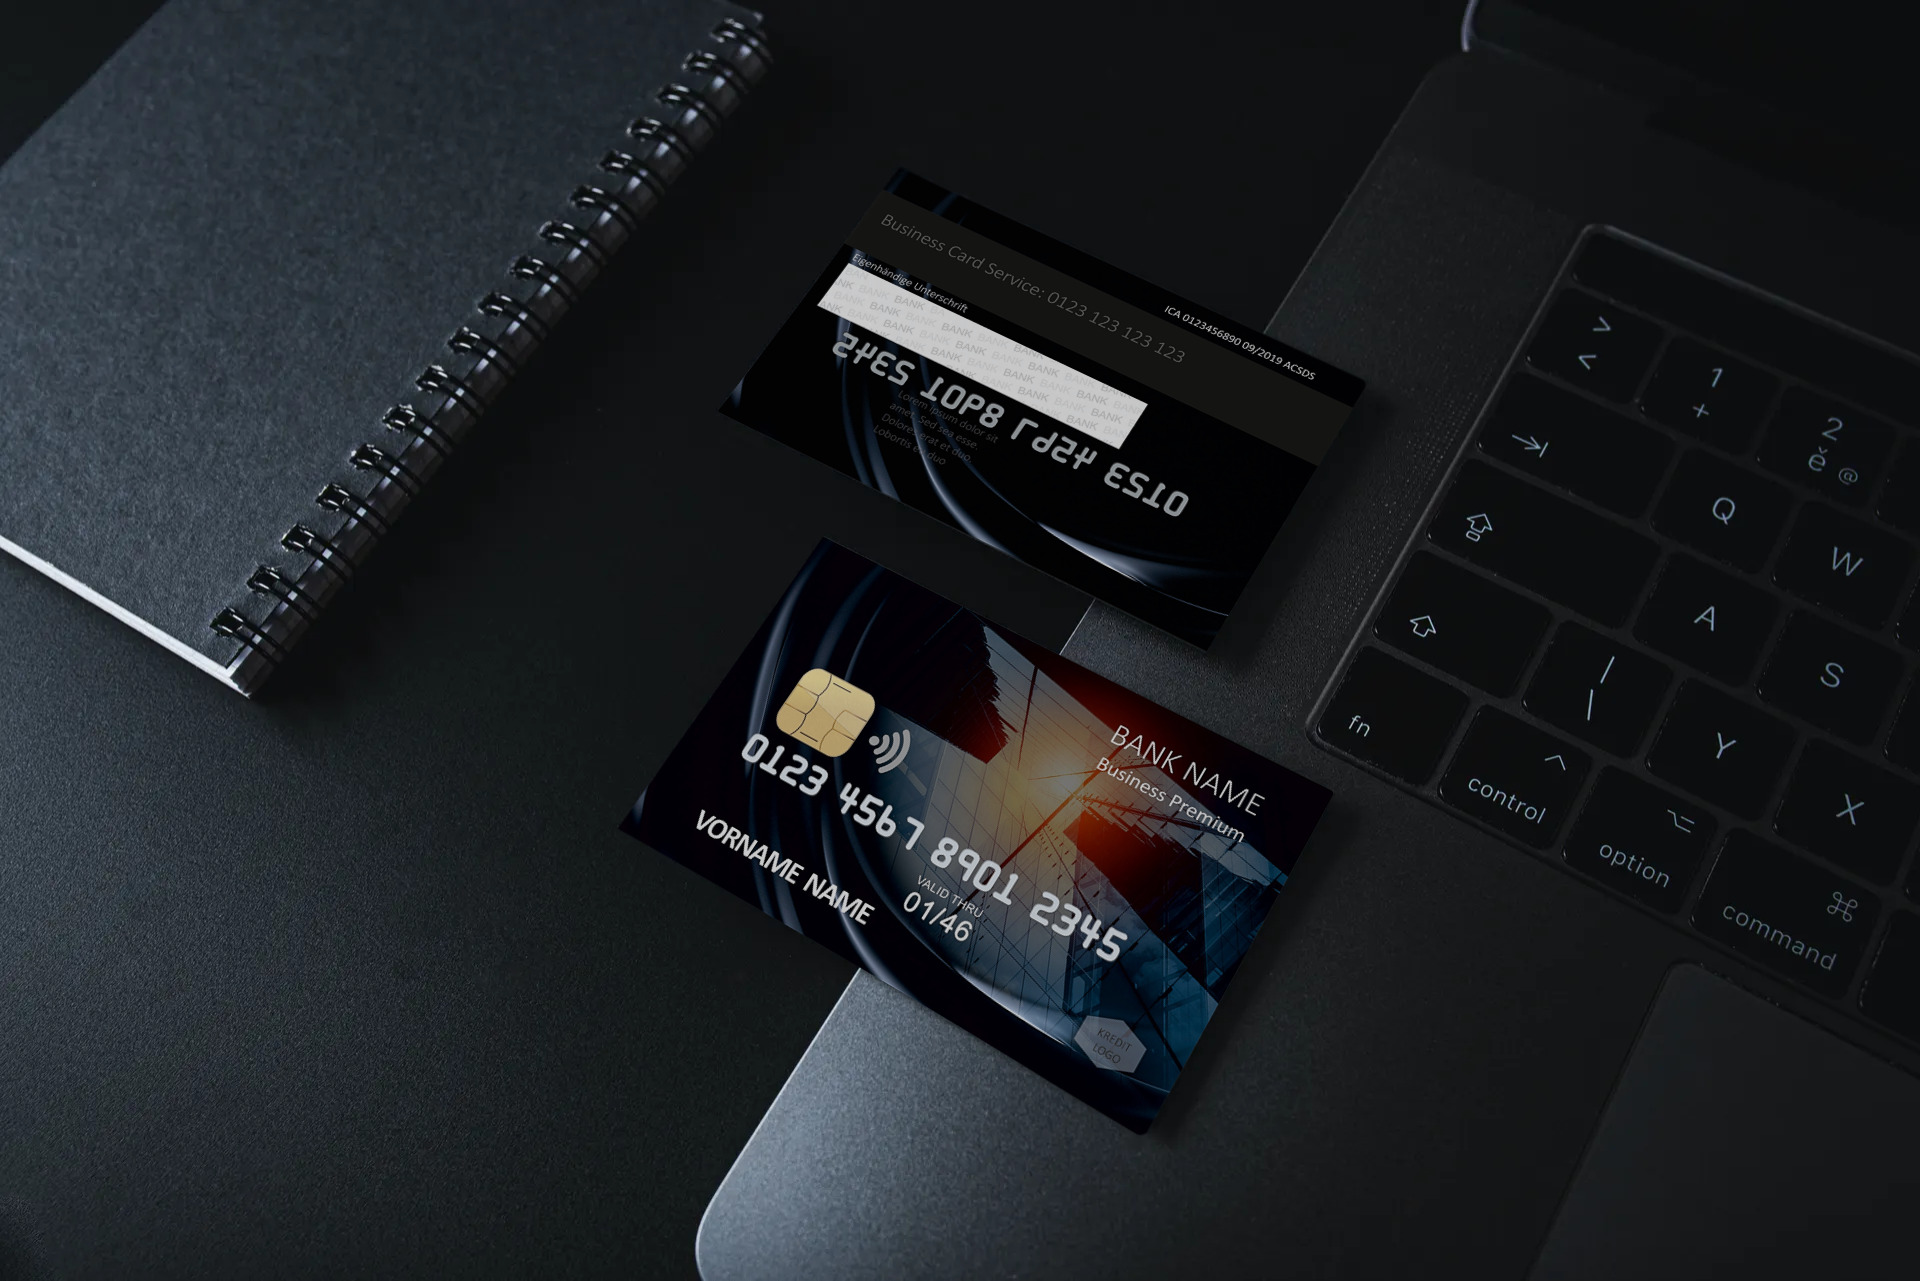 KC-2019-000100 Kreditkarten Design - Kreditkarte mit individuellem Motiv - Plastikkarten bedrucken